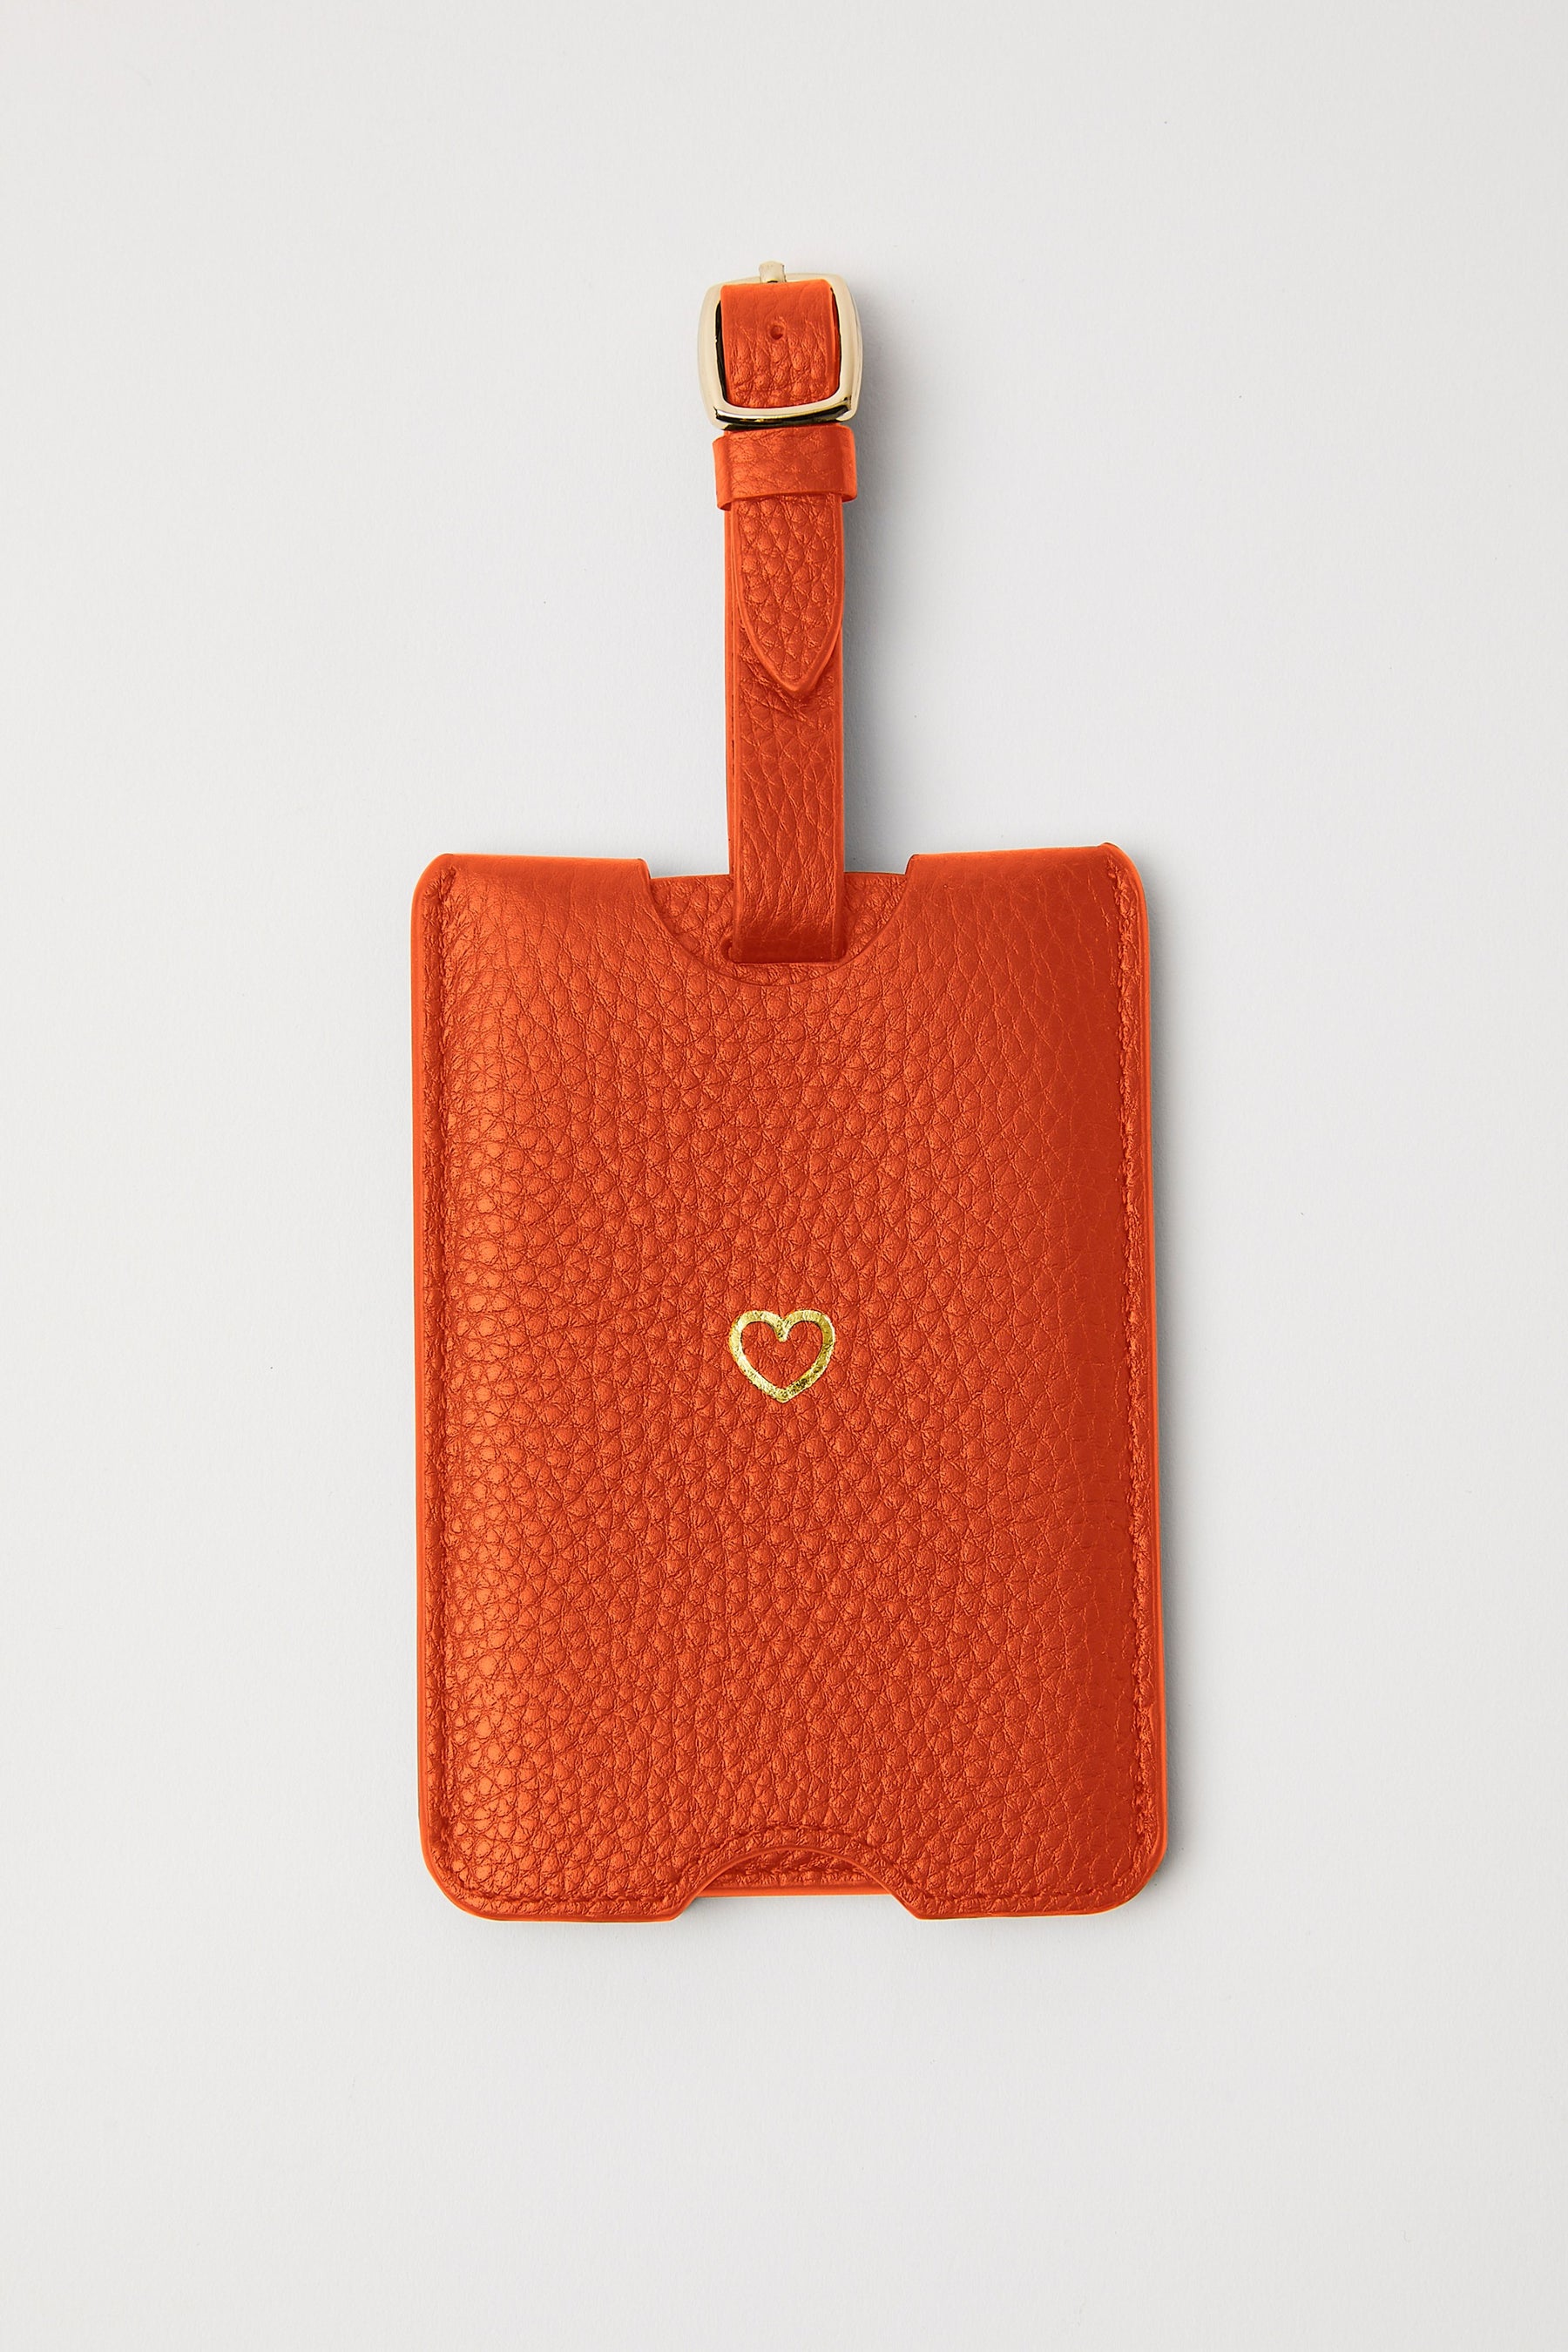 Personalised Leather Luggage Tag | Orange Gold